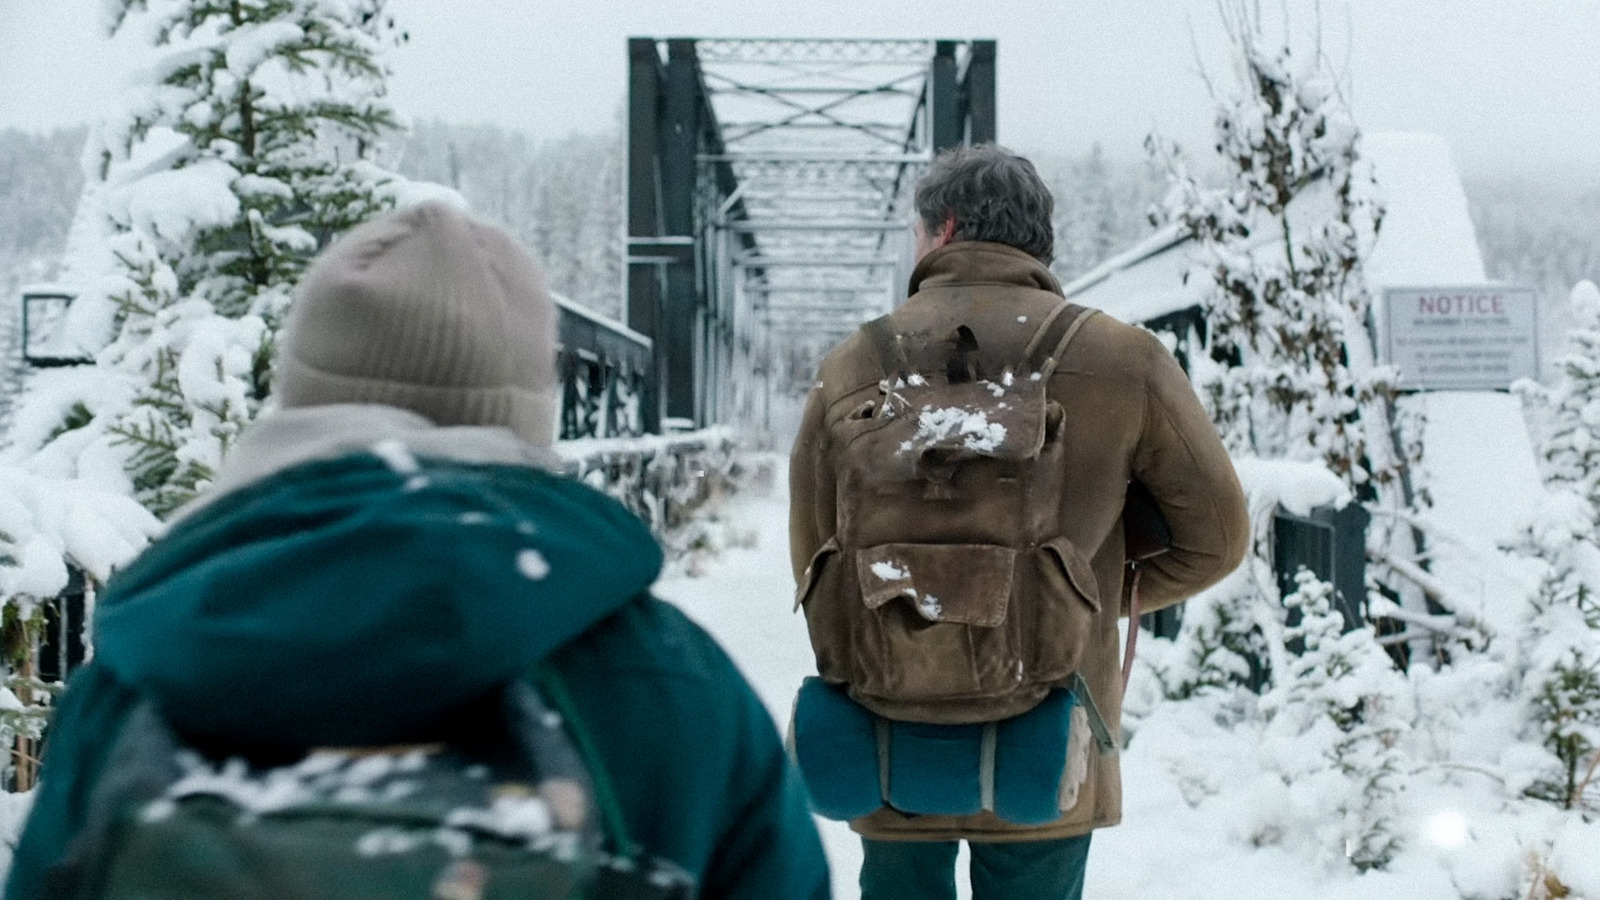 The Last of Us  Pedro Pascal será Joel na série da HBO - Cinema